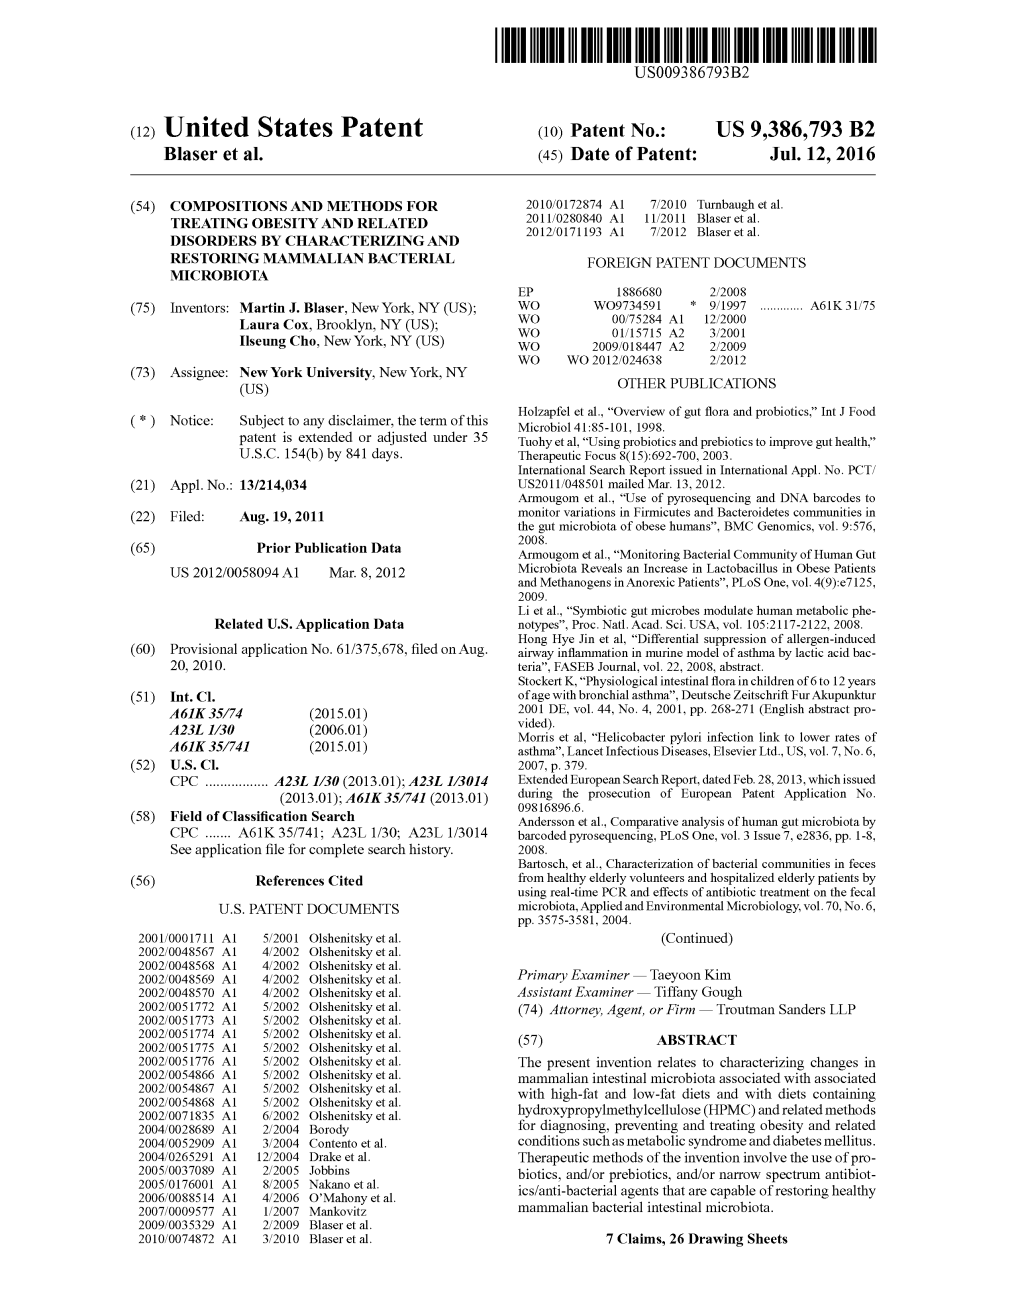 (12) United States Patent (10) Patent No.: US 9,386,793 B2 Blaser Et Al